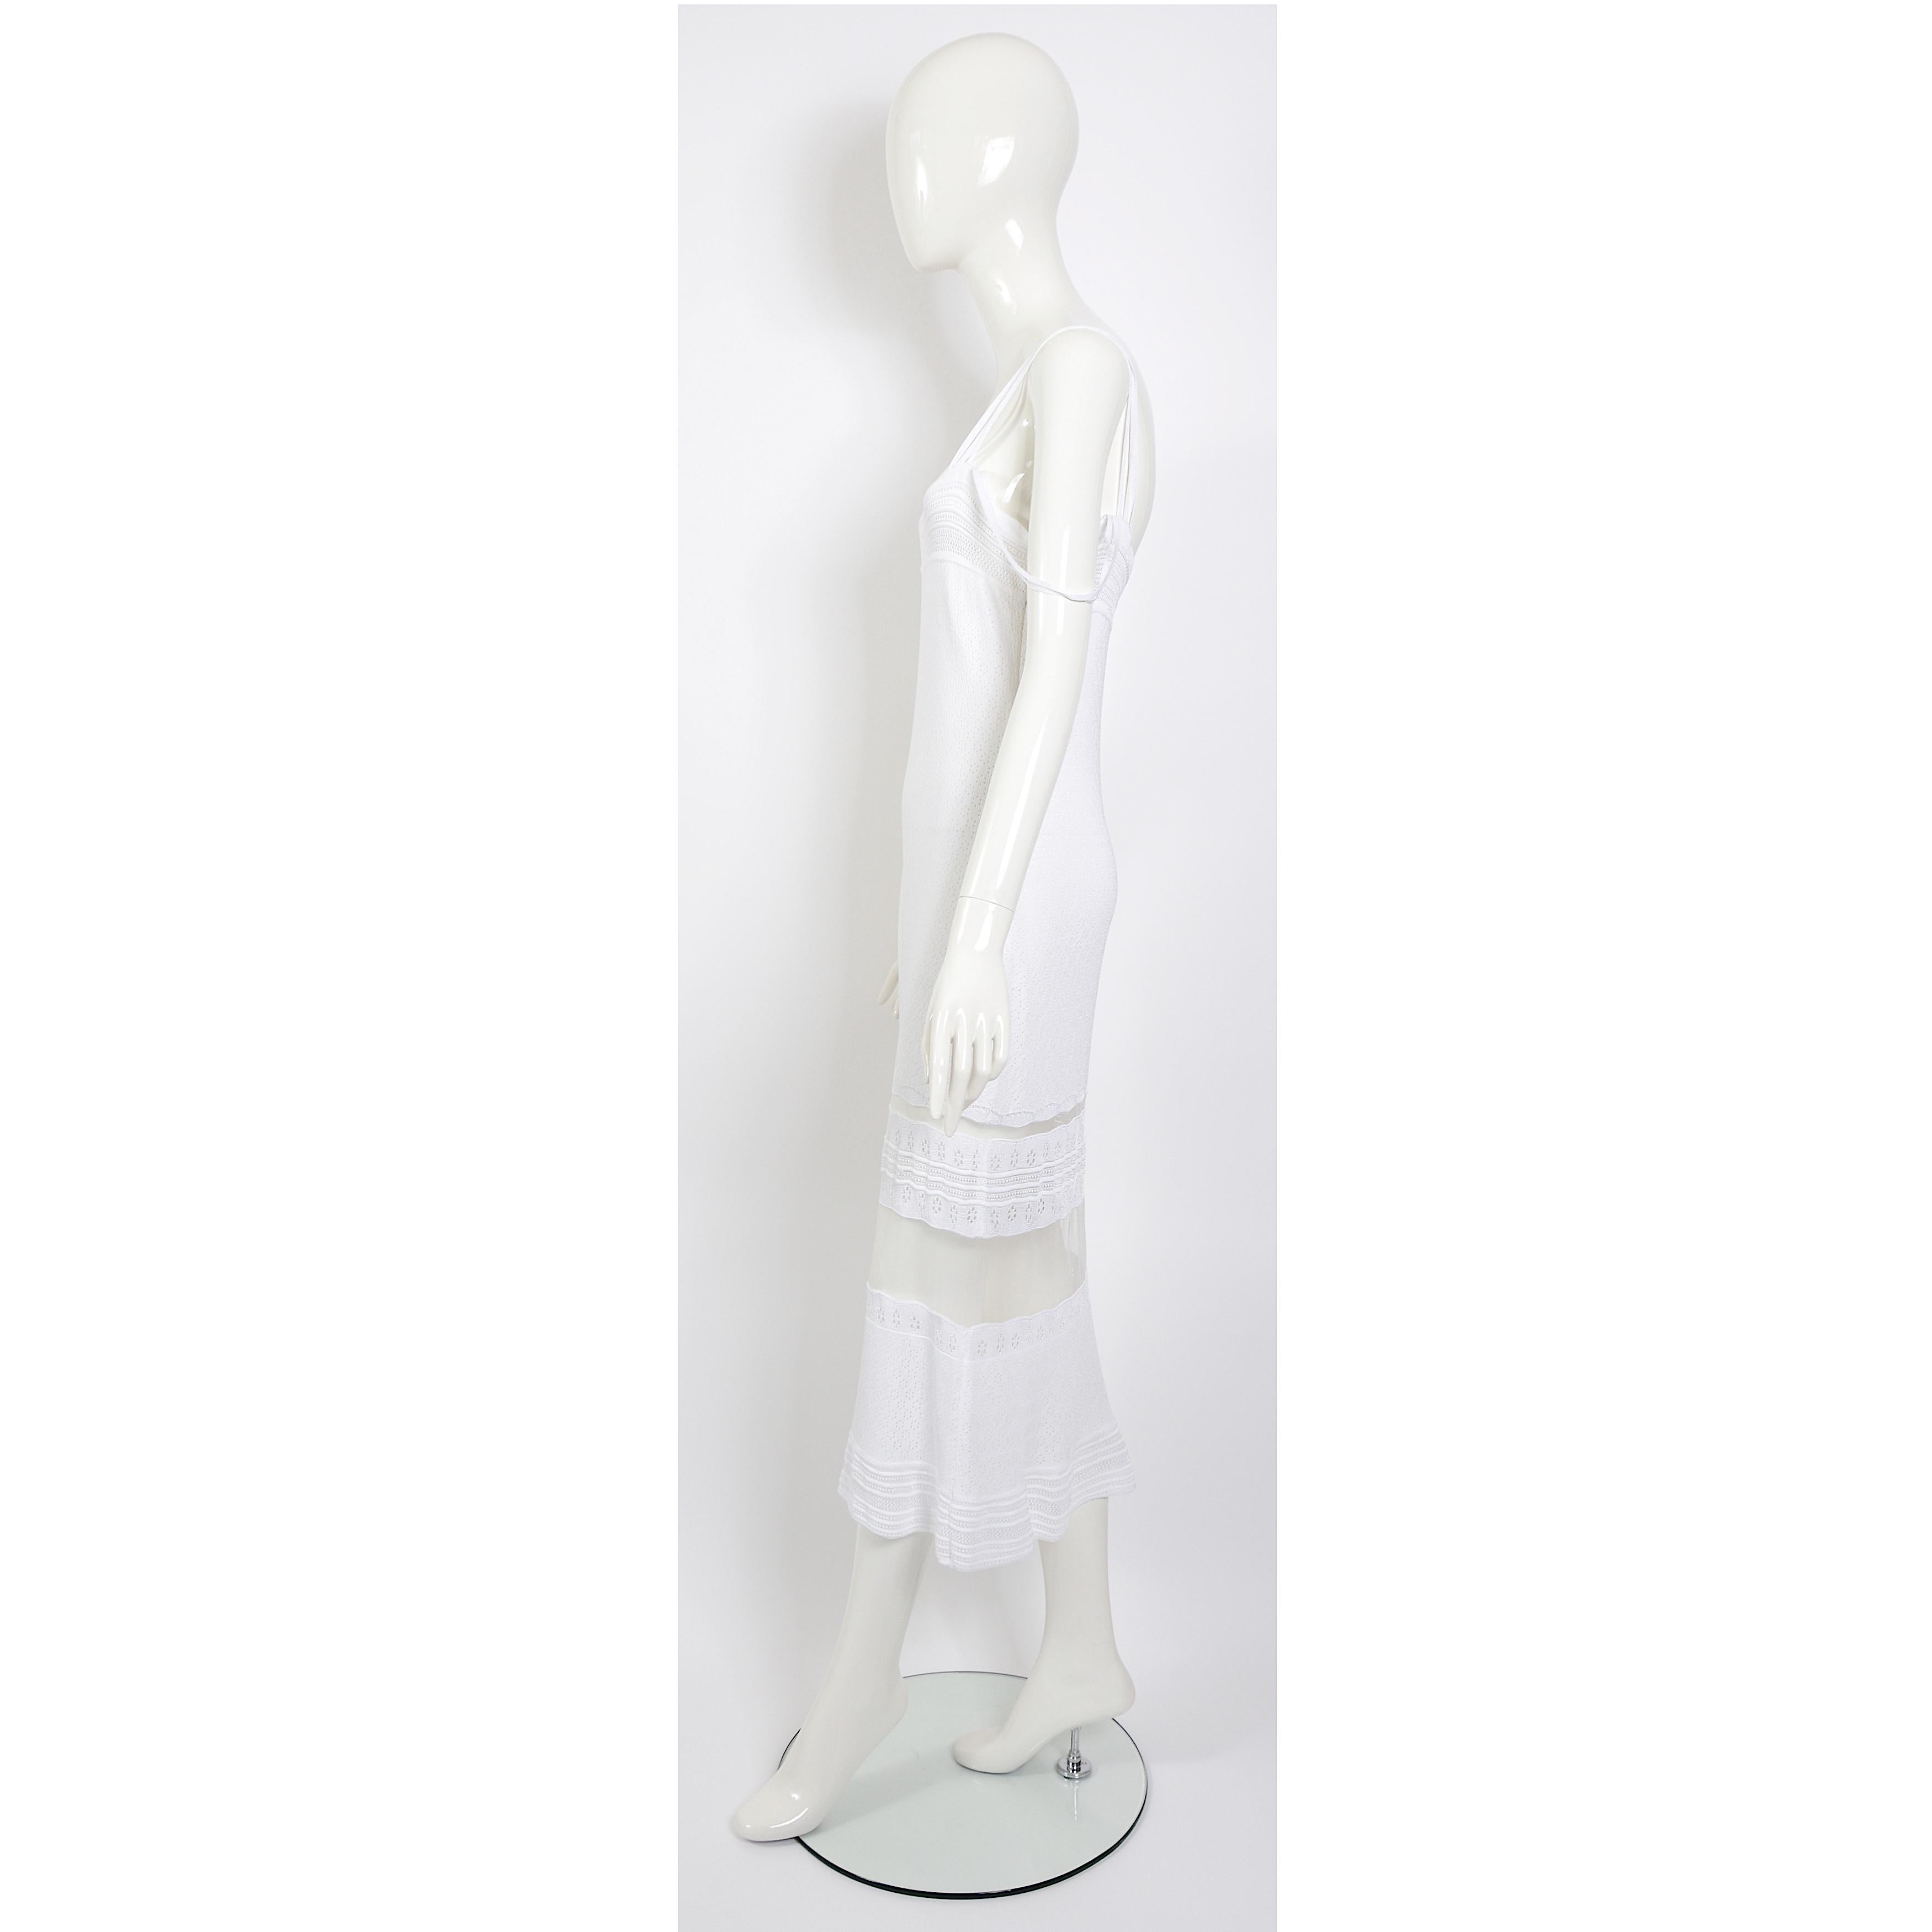  John Galliano S/S 1998 vintage white knit & mesh wedding or evening dress  6